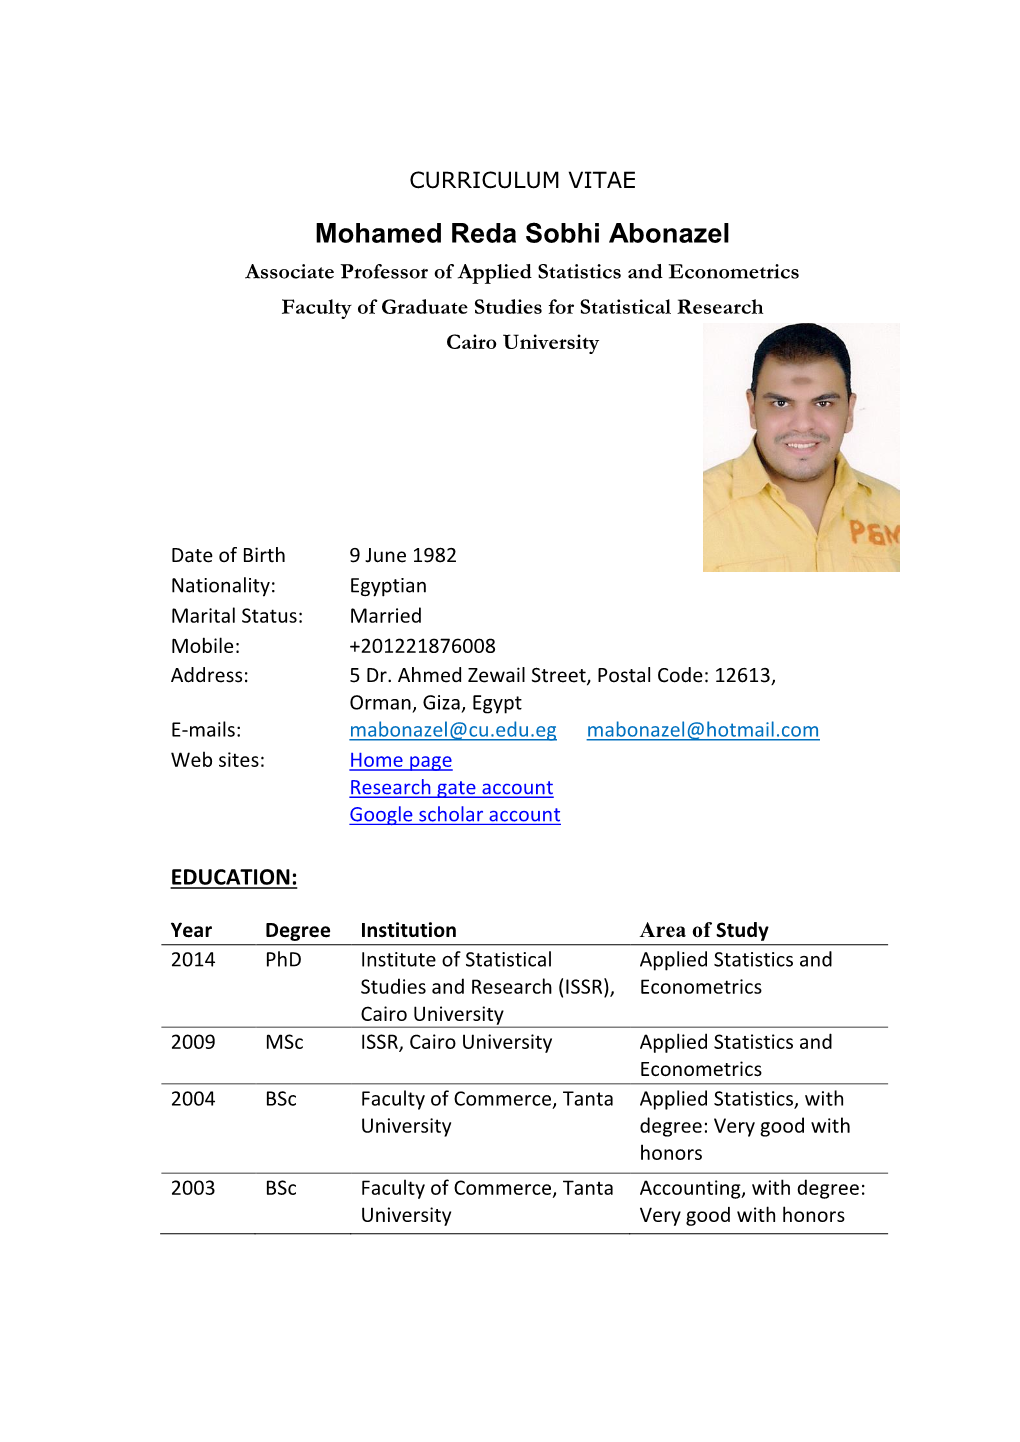 Mohamed Reda Sobhi Abonazel Associate Professor of Applied Statistics and Econometrics Faculty of Graduate Studies for Statistical Research Cairo University